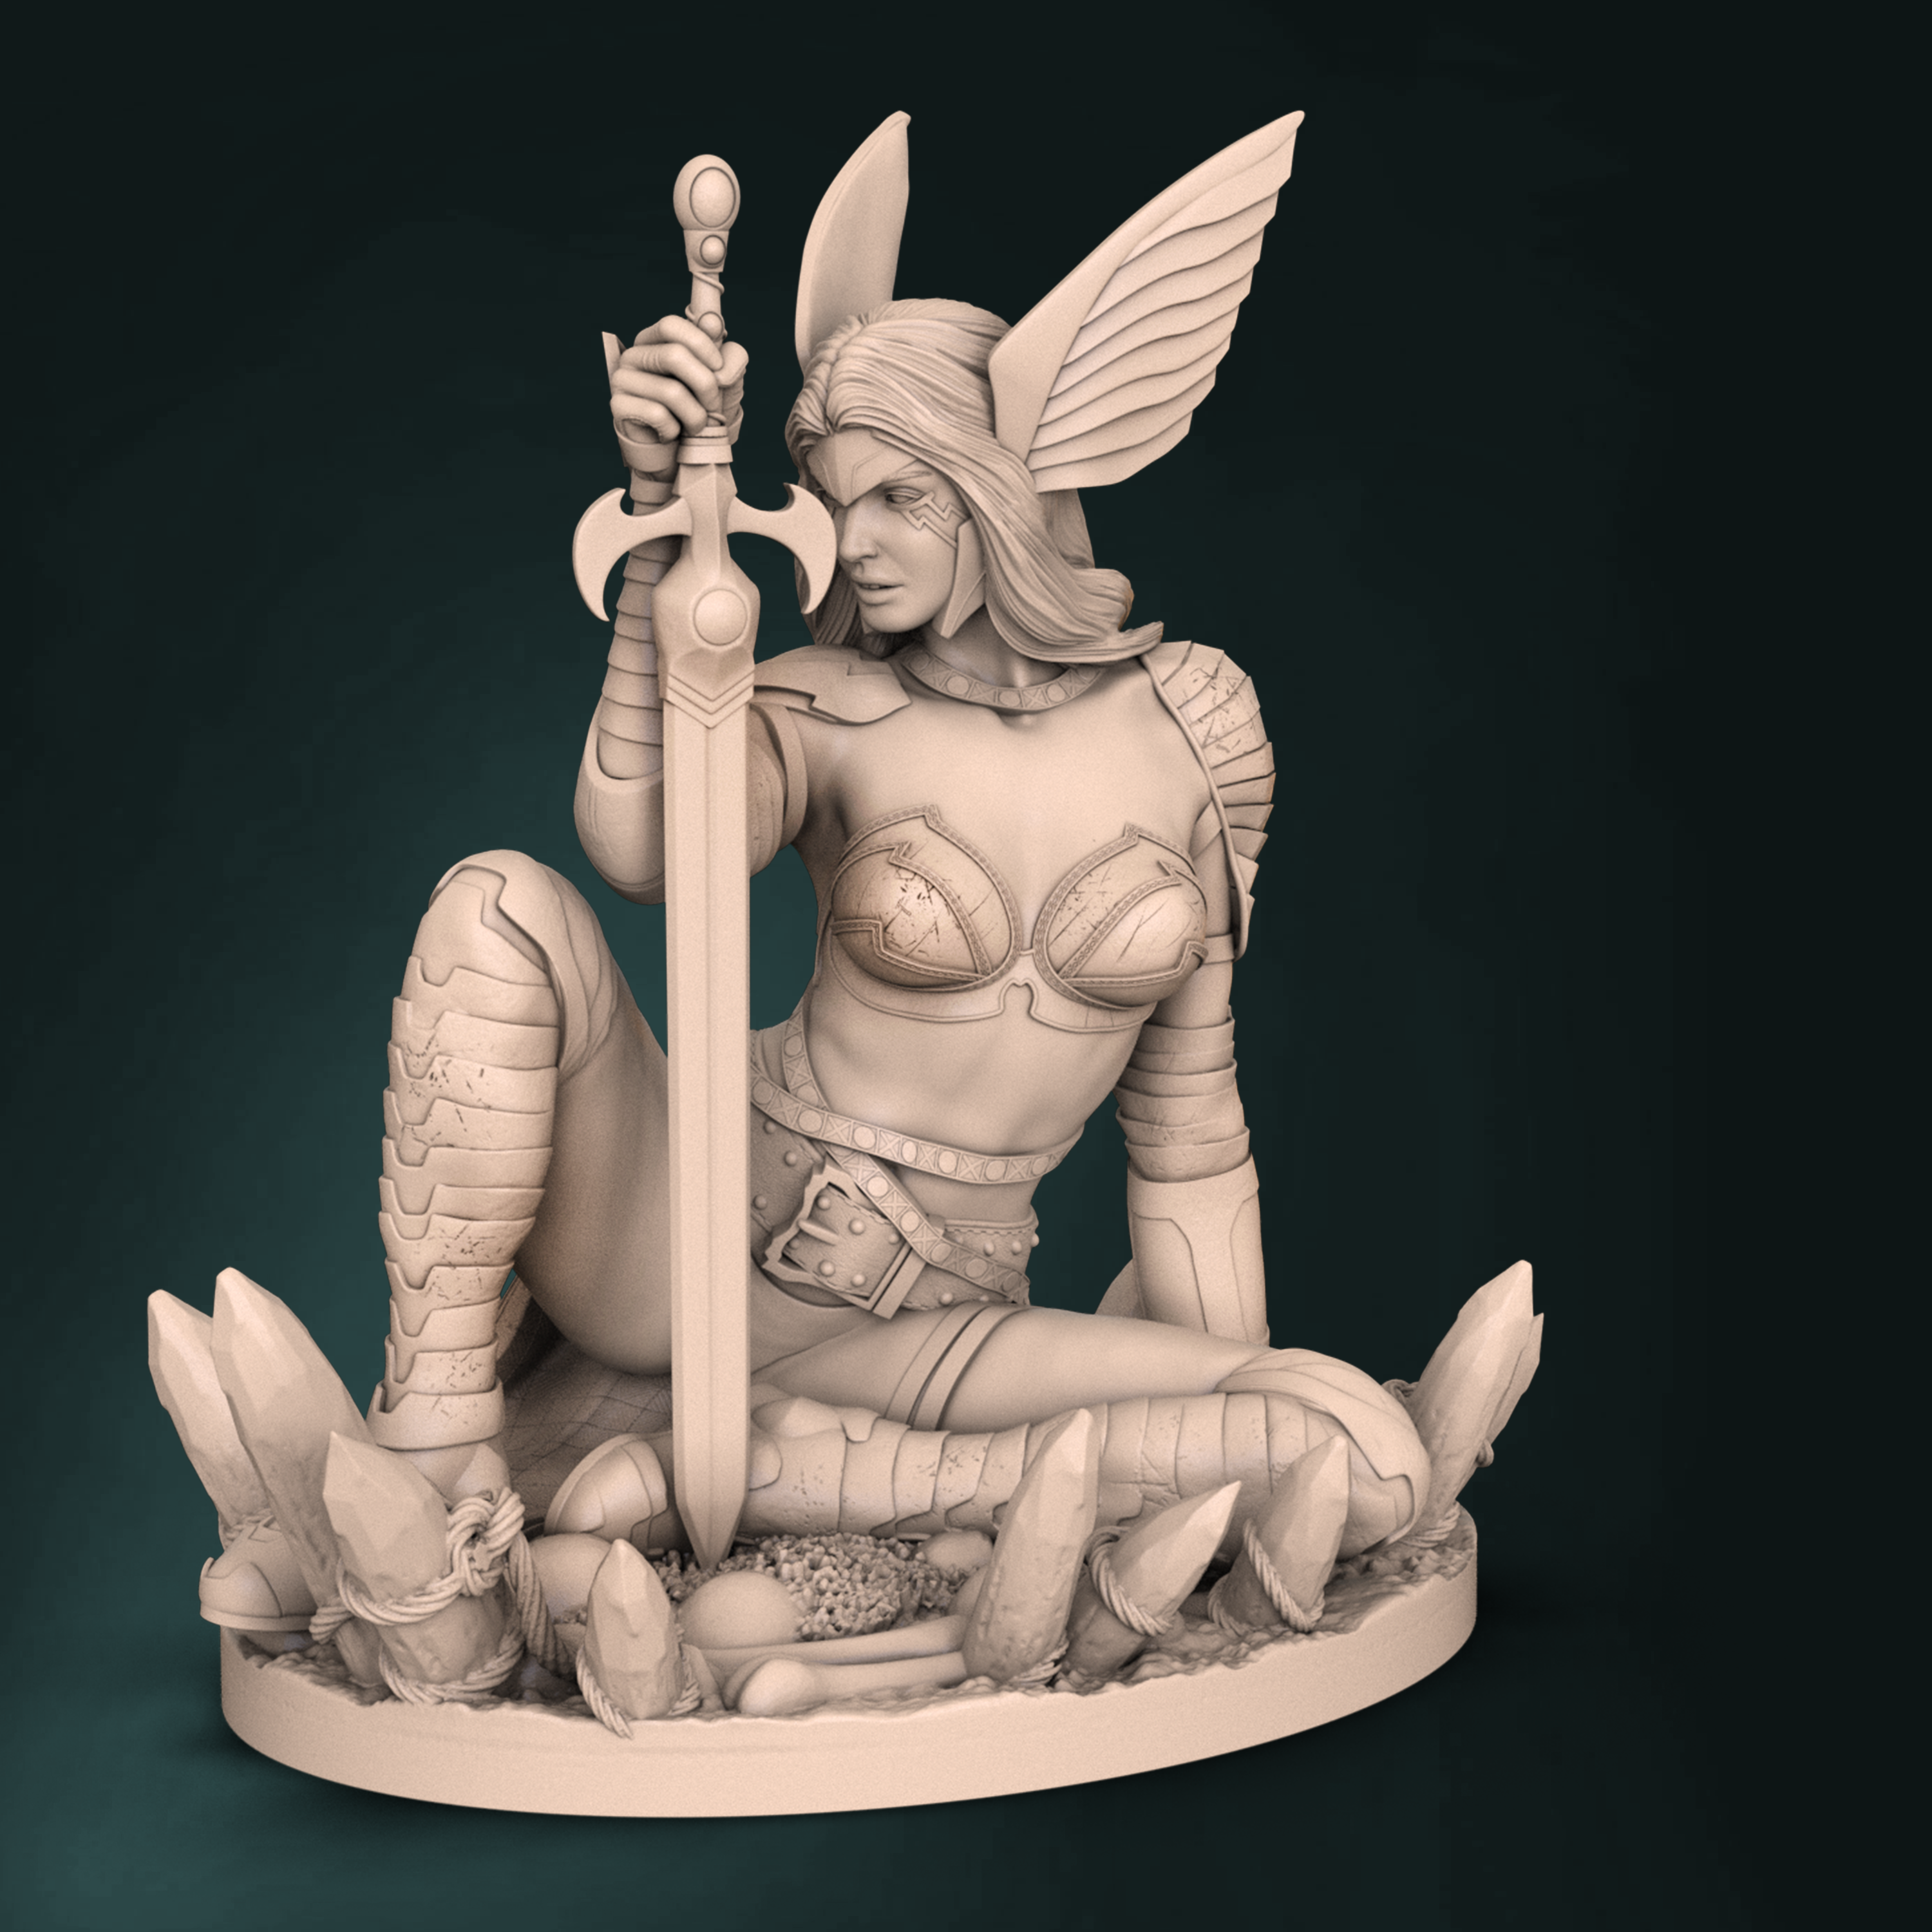 Angela 3D Printed model - Fan Art, SFW/NSFW 75mm or 180mm